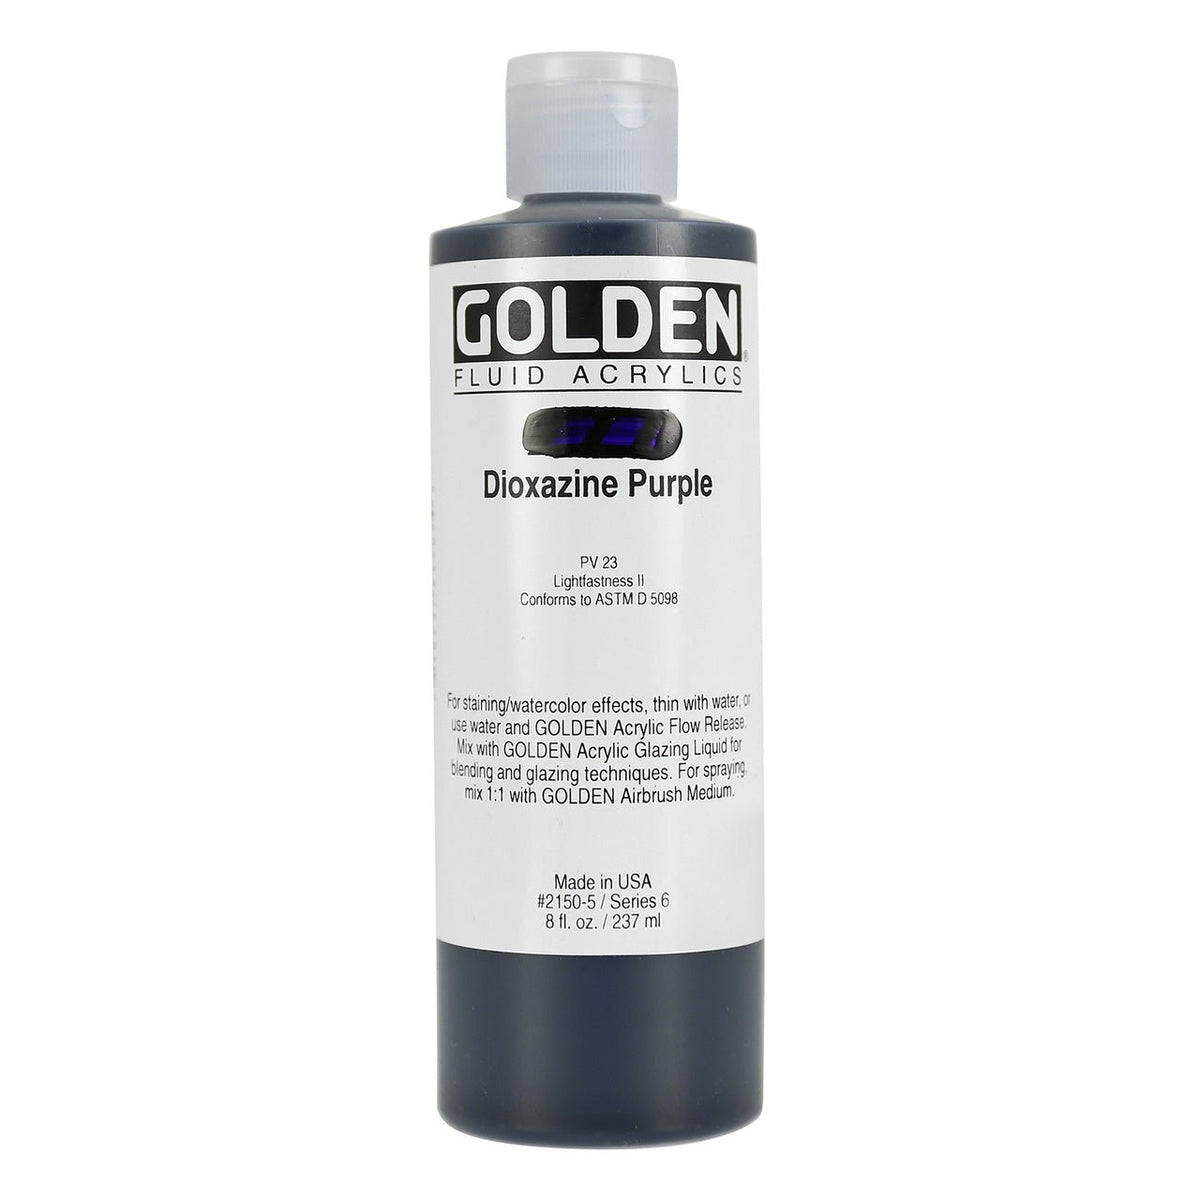 Golden Fluid Acrylic Dioxazine Purple 8 oz - merriartist.com